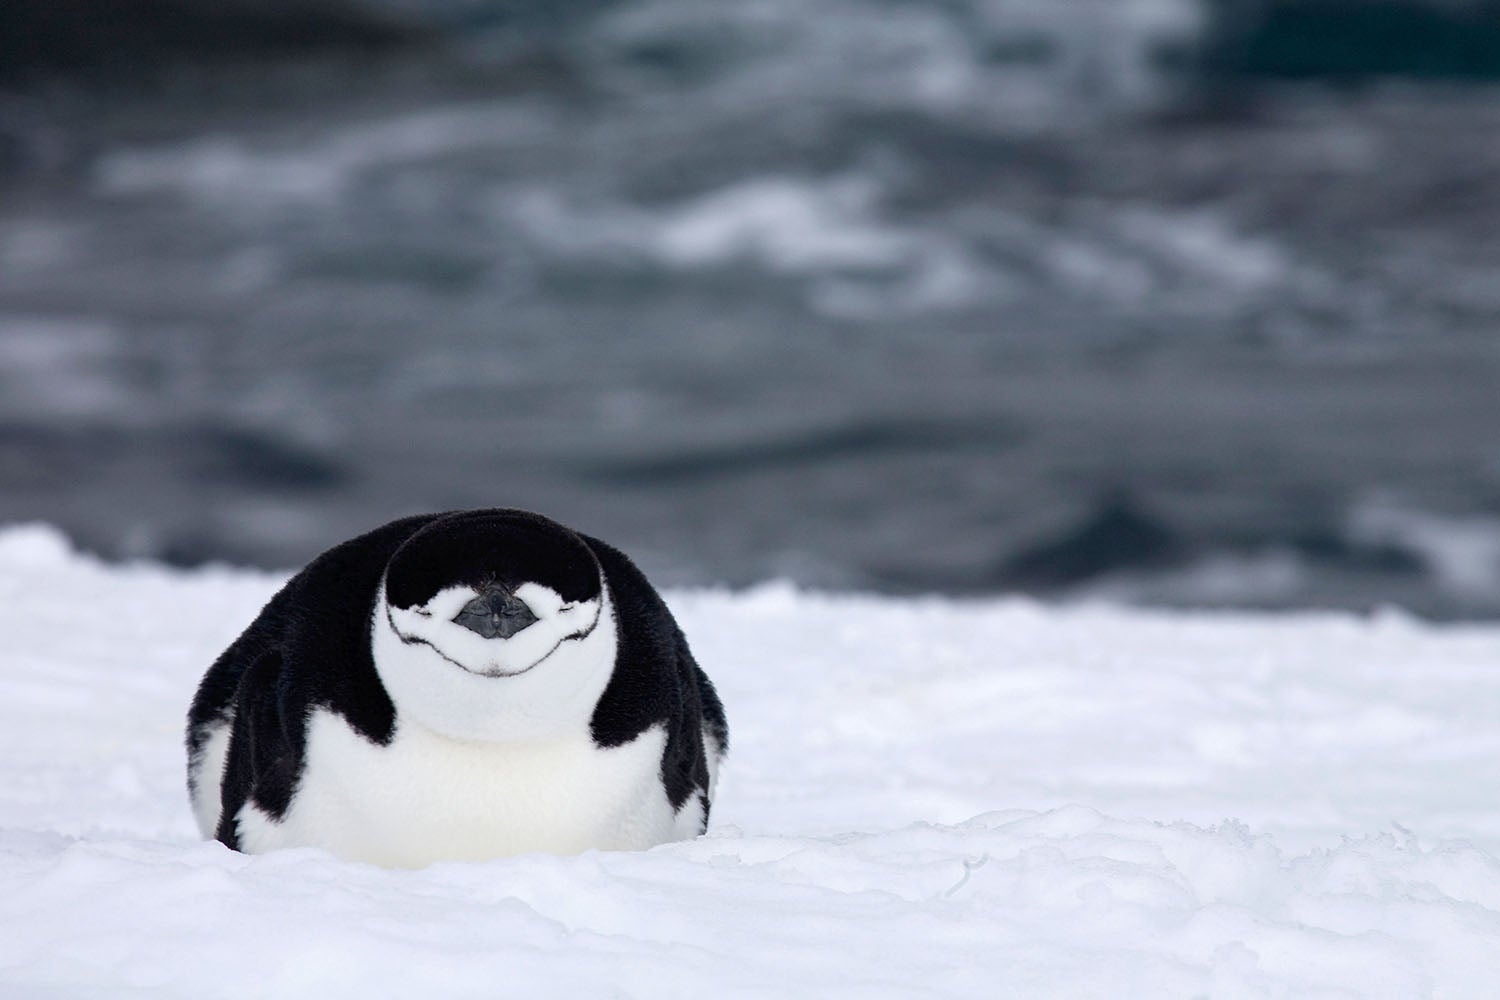 Nesting Penguins Take More Than 10,000 Mini Naps Every Day